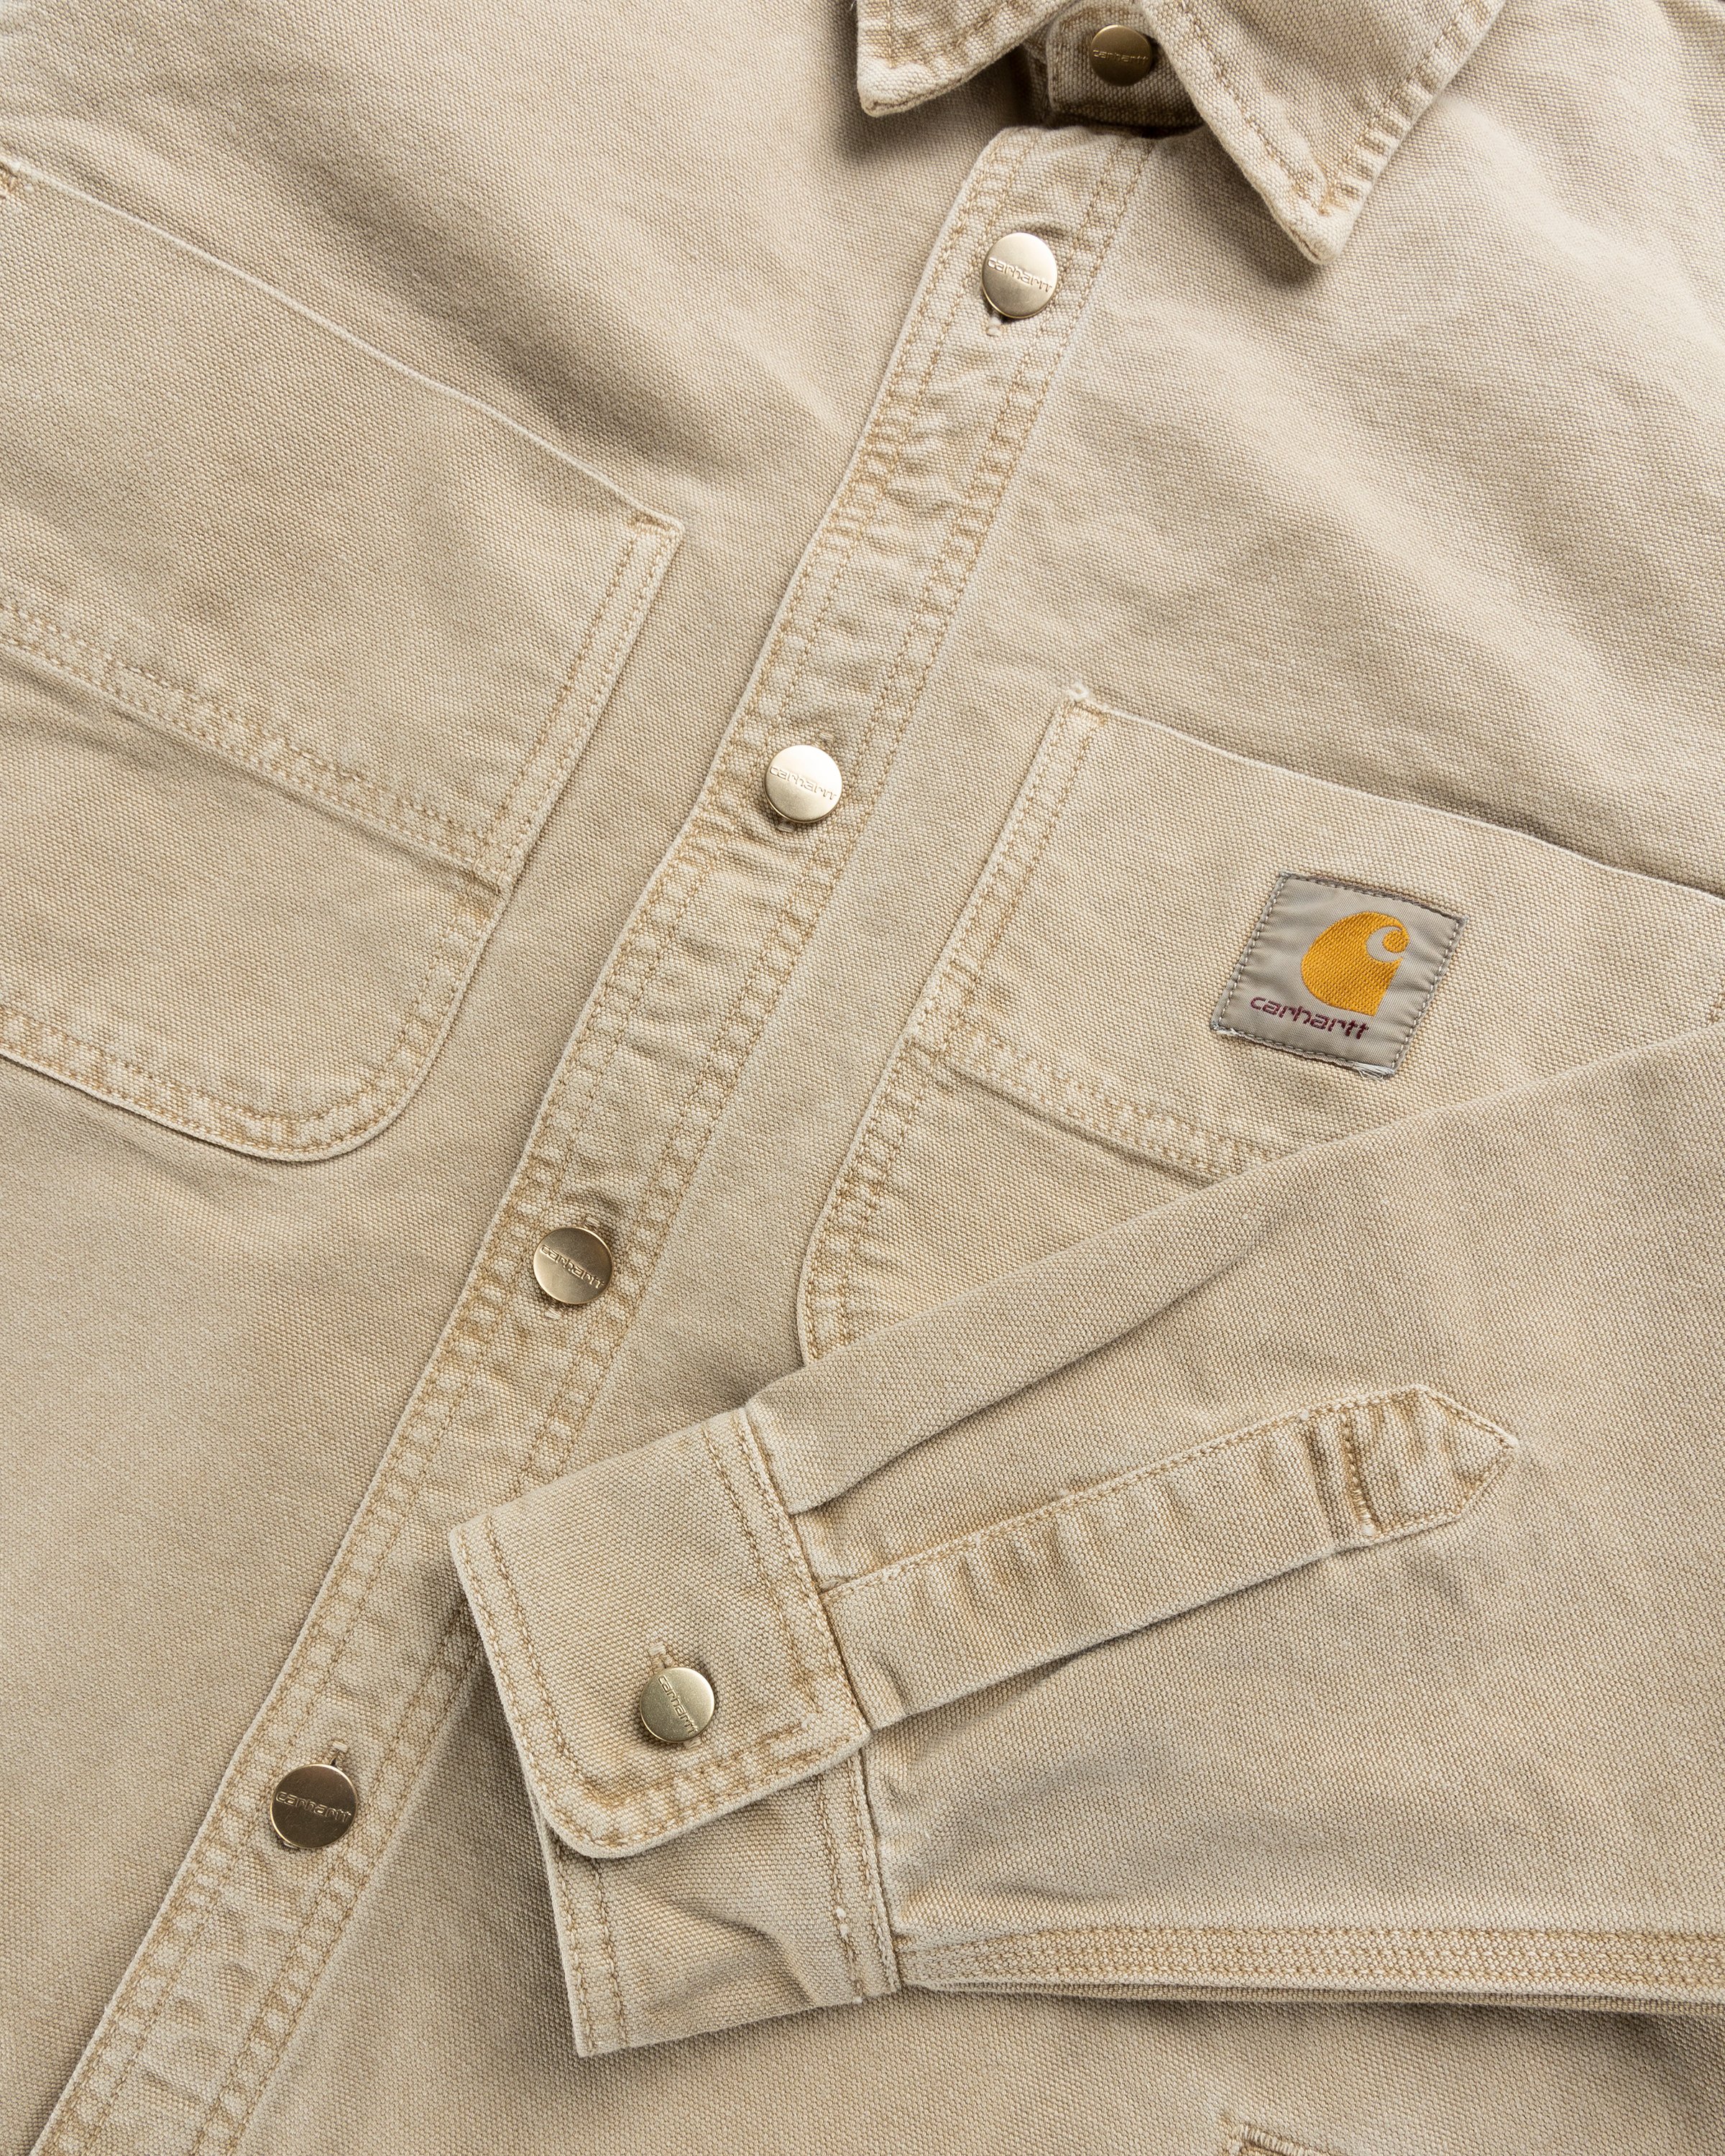 Carhartt WIP - Glenn Shirt Jacket Dusty Hamilton Brown - Clothing - Brown - Image 4